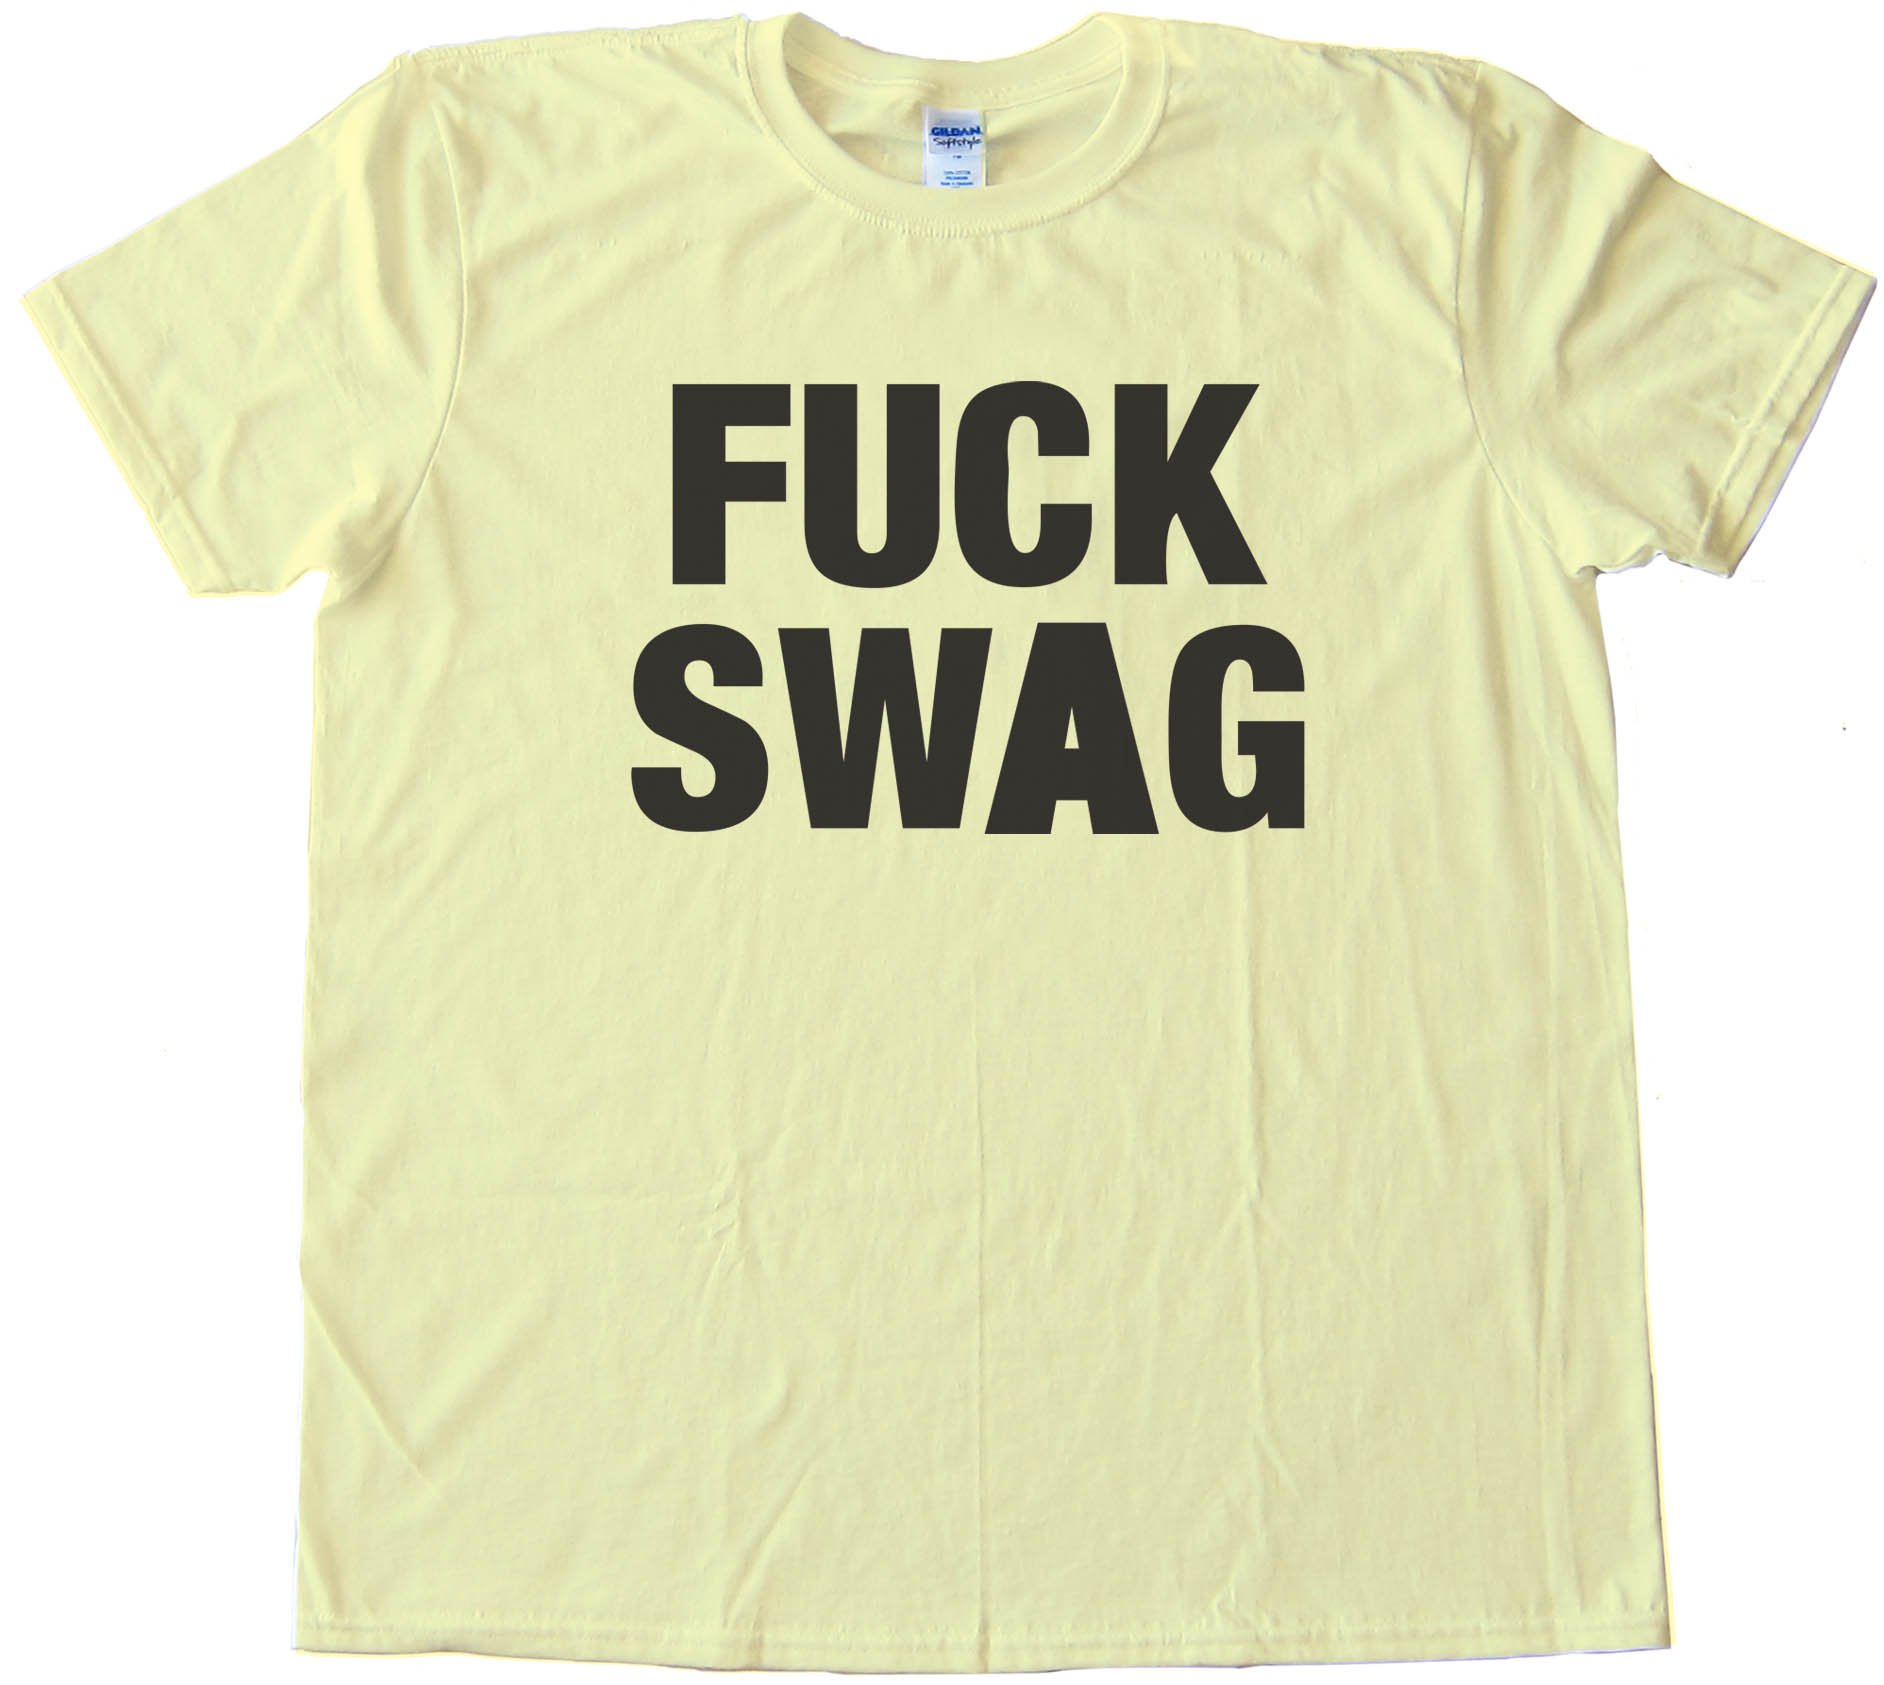 Fuck Swag - Tee Shirt